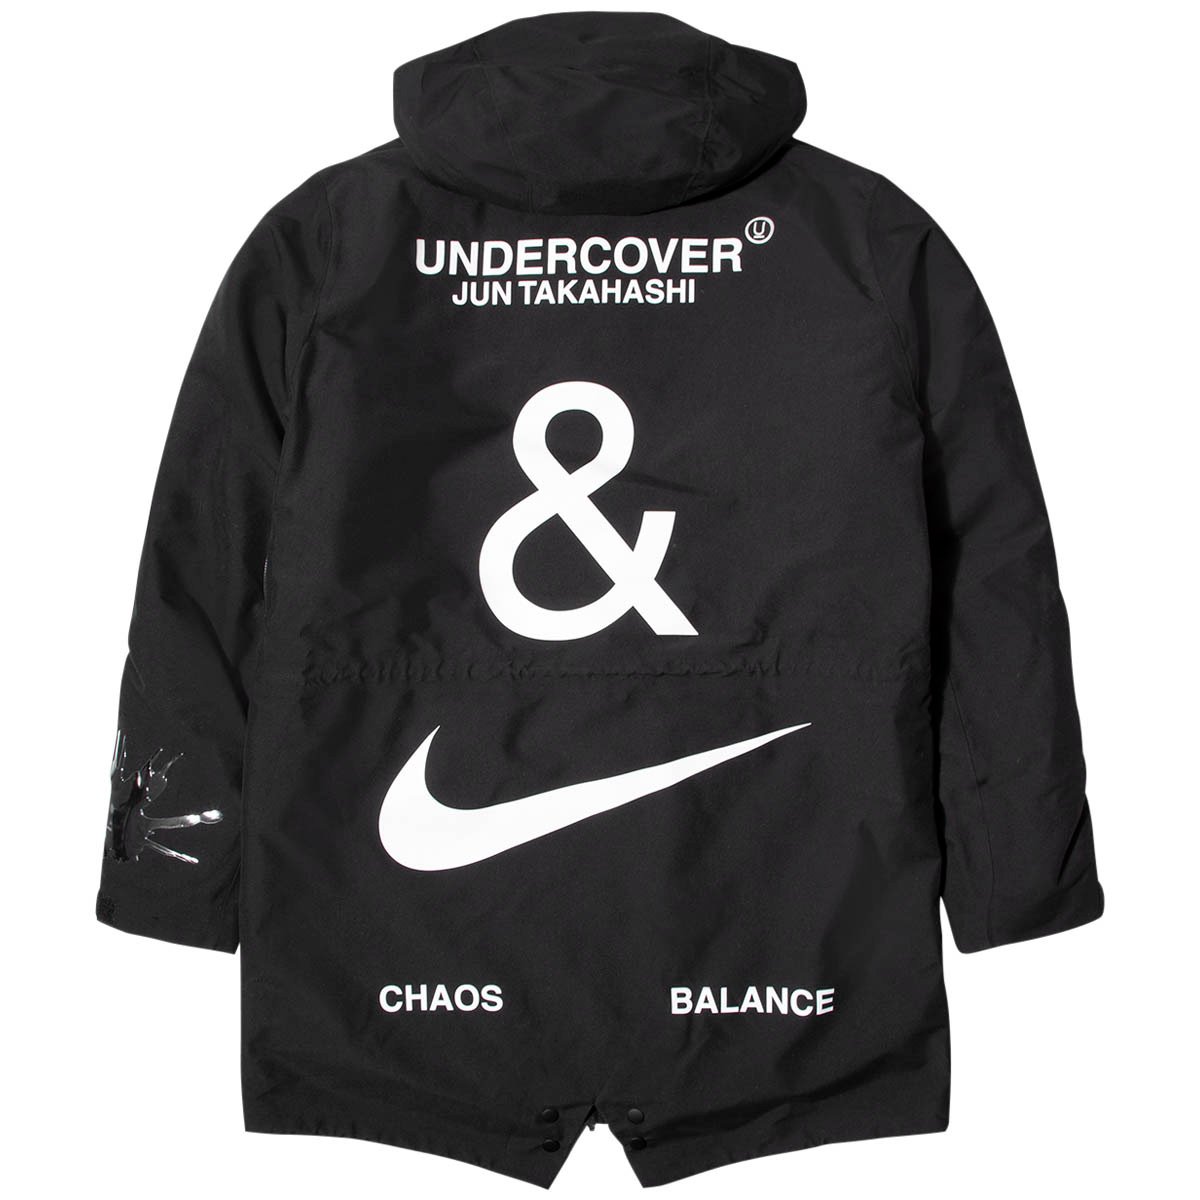 nikelab x undercover chaos balance jacket